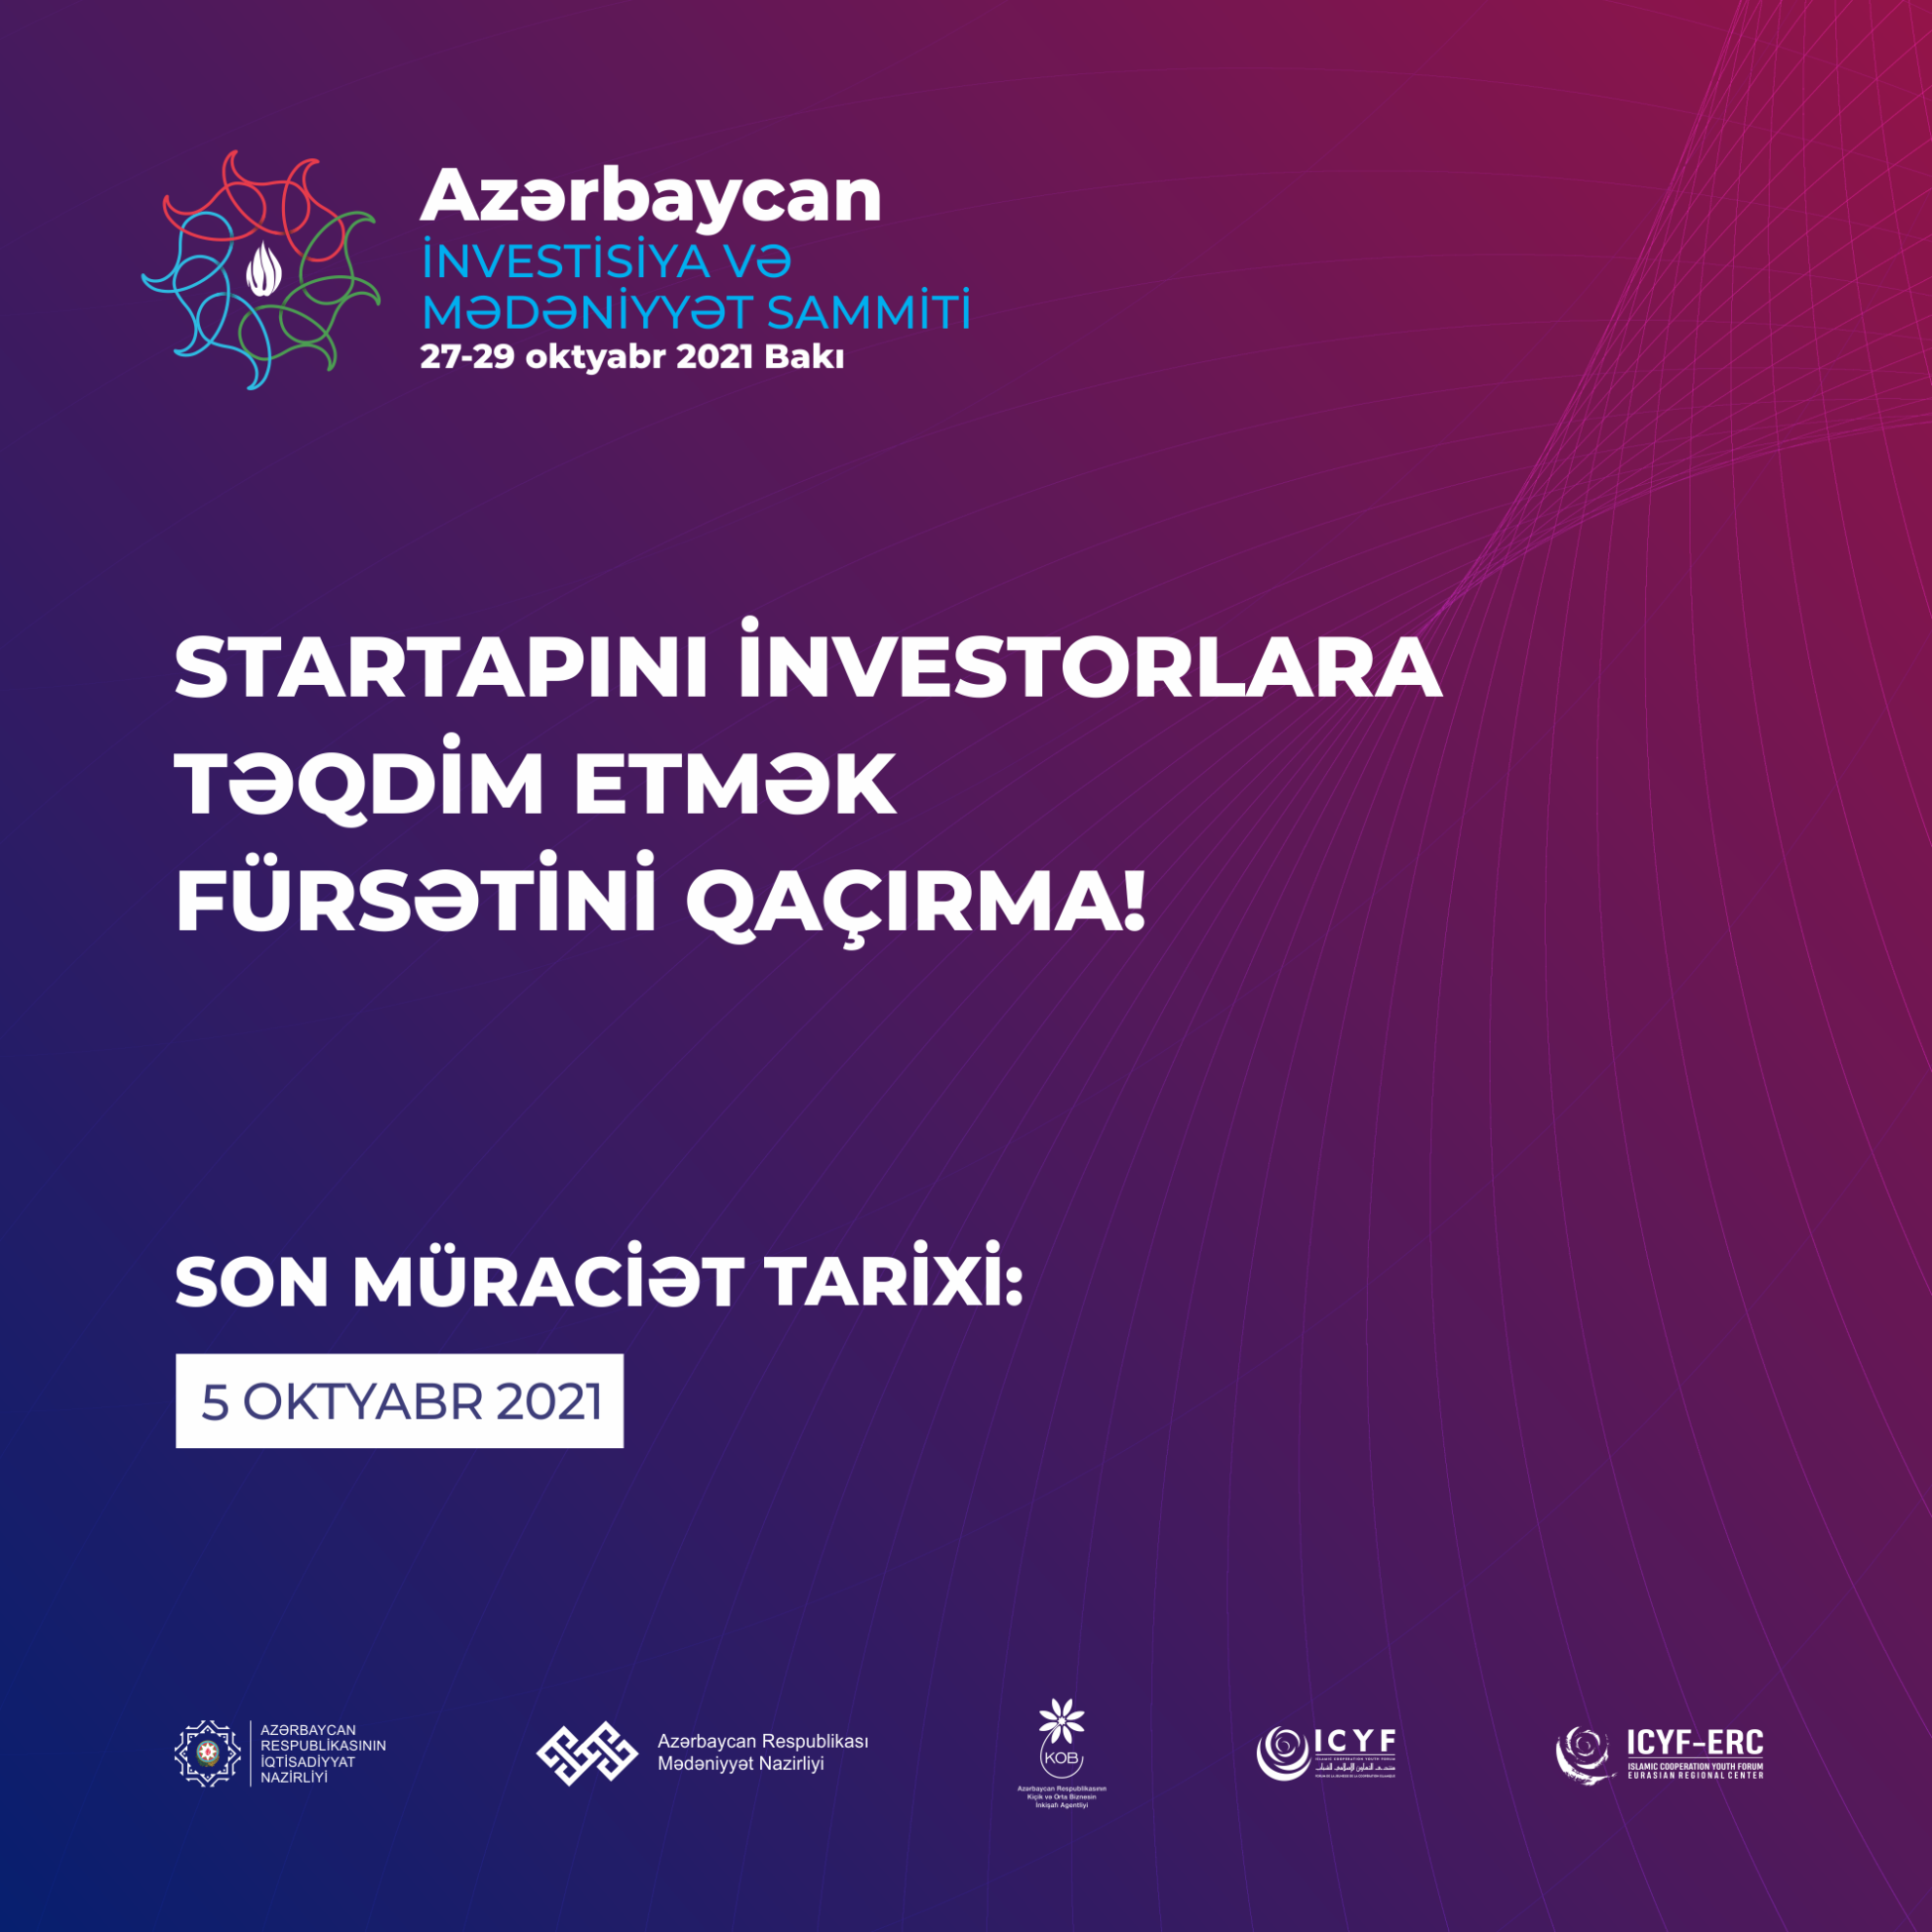 azerbaycan-investisiya-ve-medeniyyet-sammiti-startaplara-layihelerini-investorlara-teqdim-etmek-furseti-verecek--